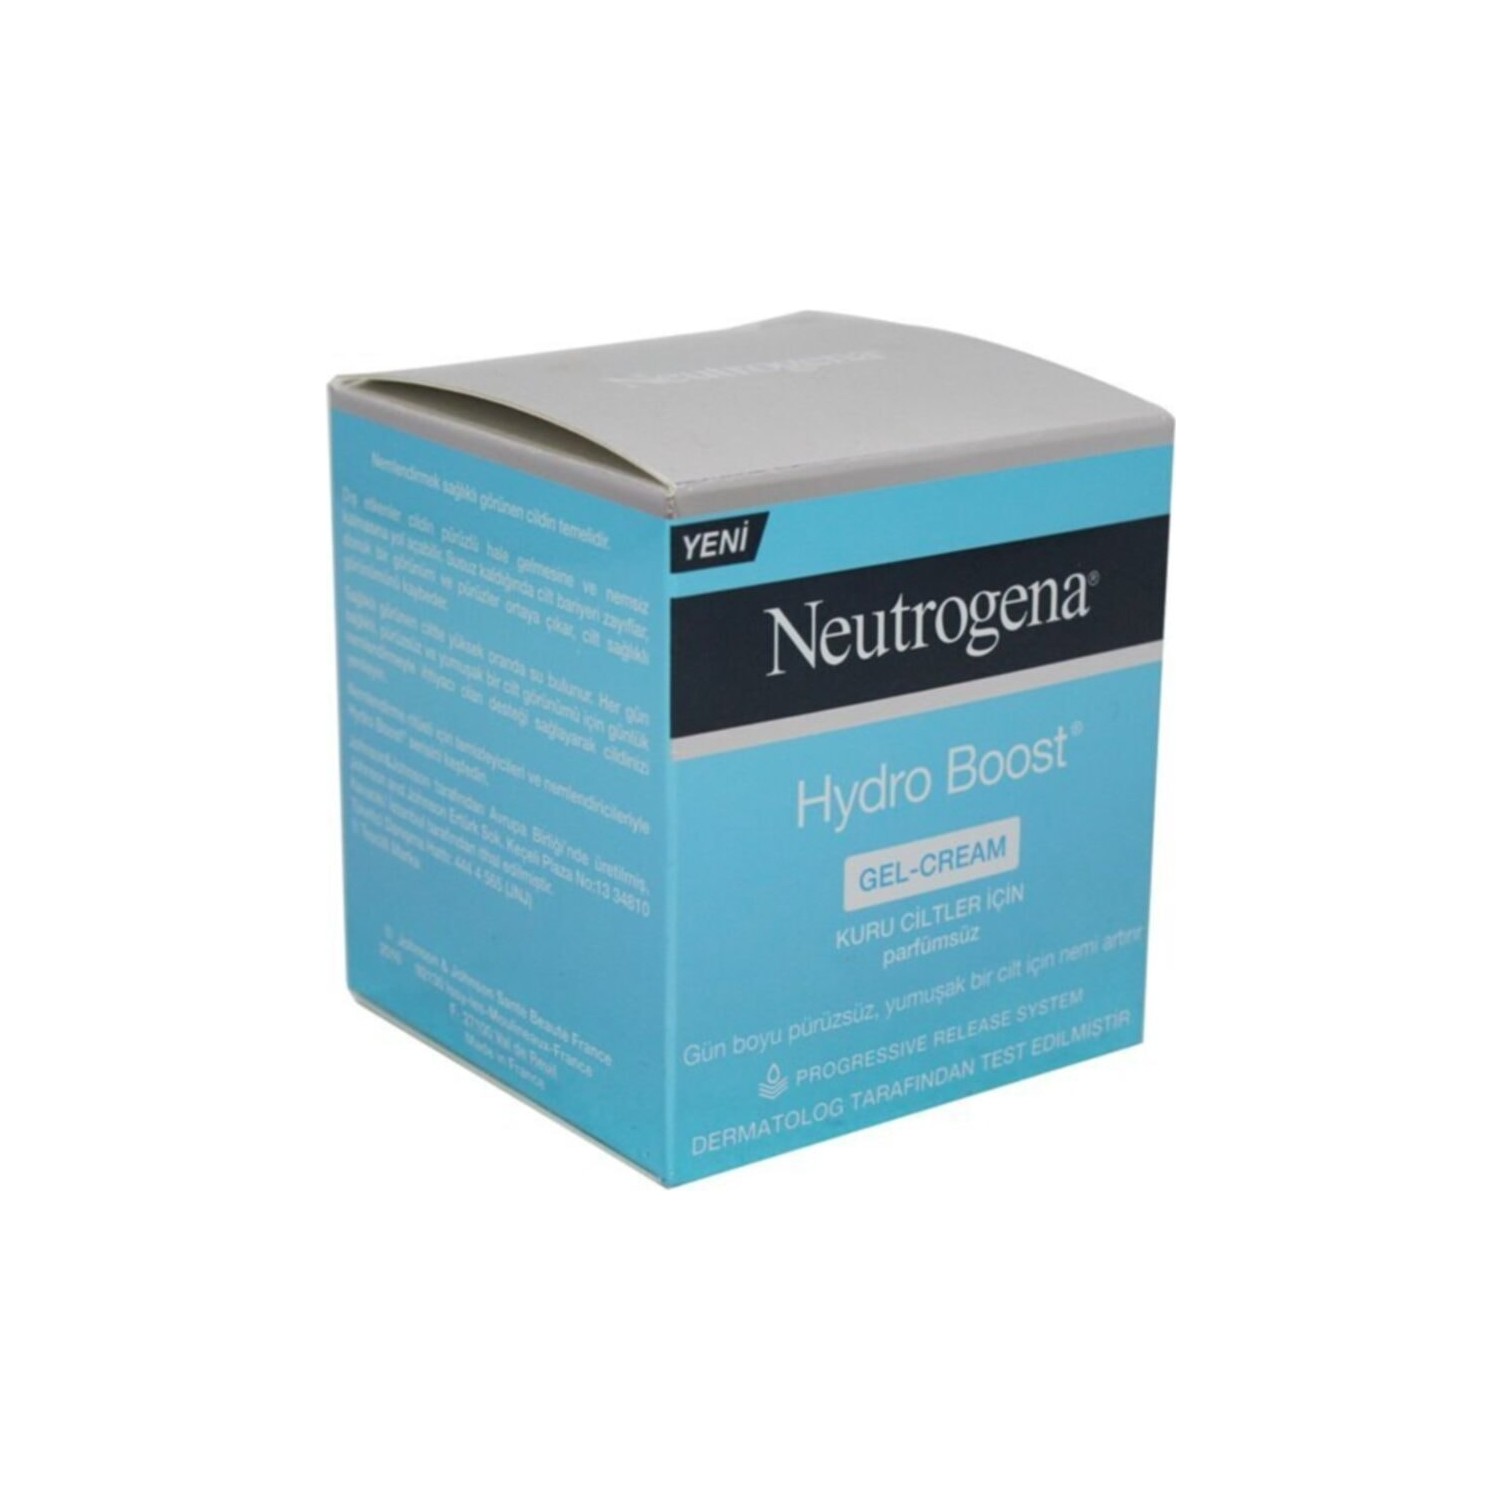 Гель-крем Neutrogena Hydro Boost для сухой кожи, 50 мл цена и фото